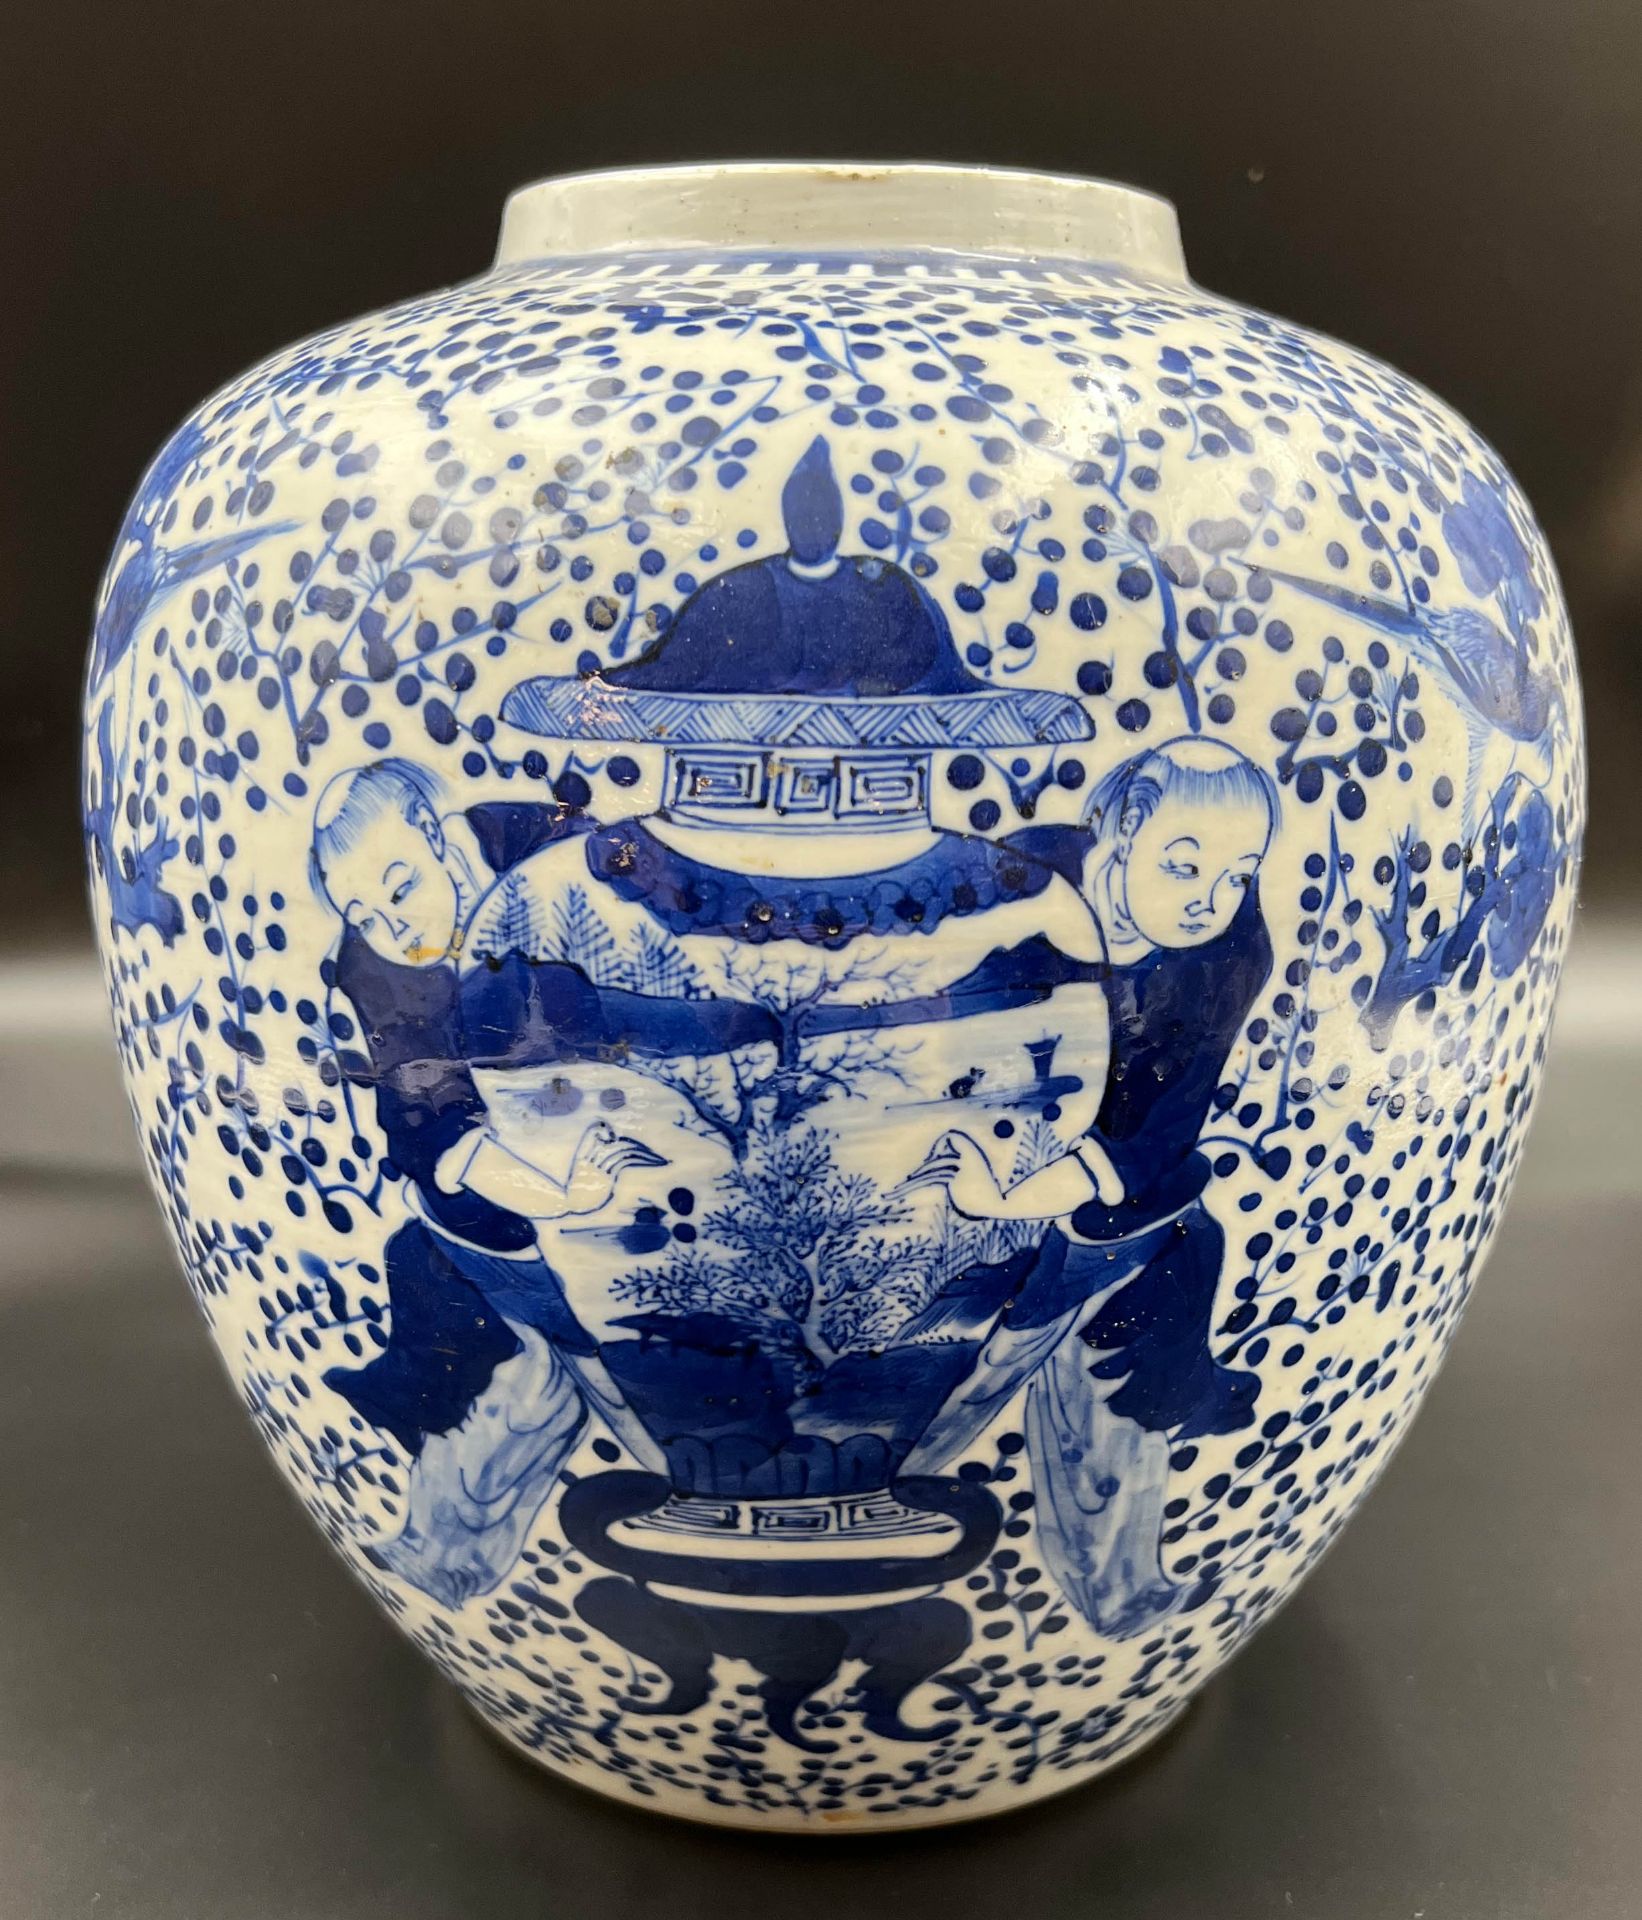 Blau-weiße Porzellan Vase mit He-He Er Xian Dekor. China. 19. Jahrhundert.